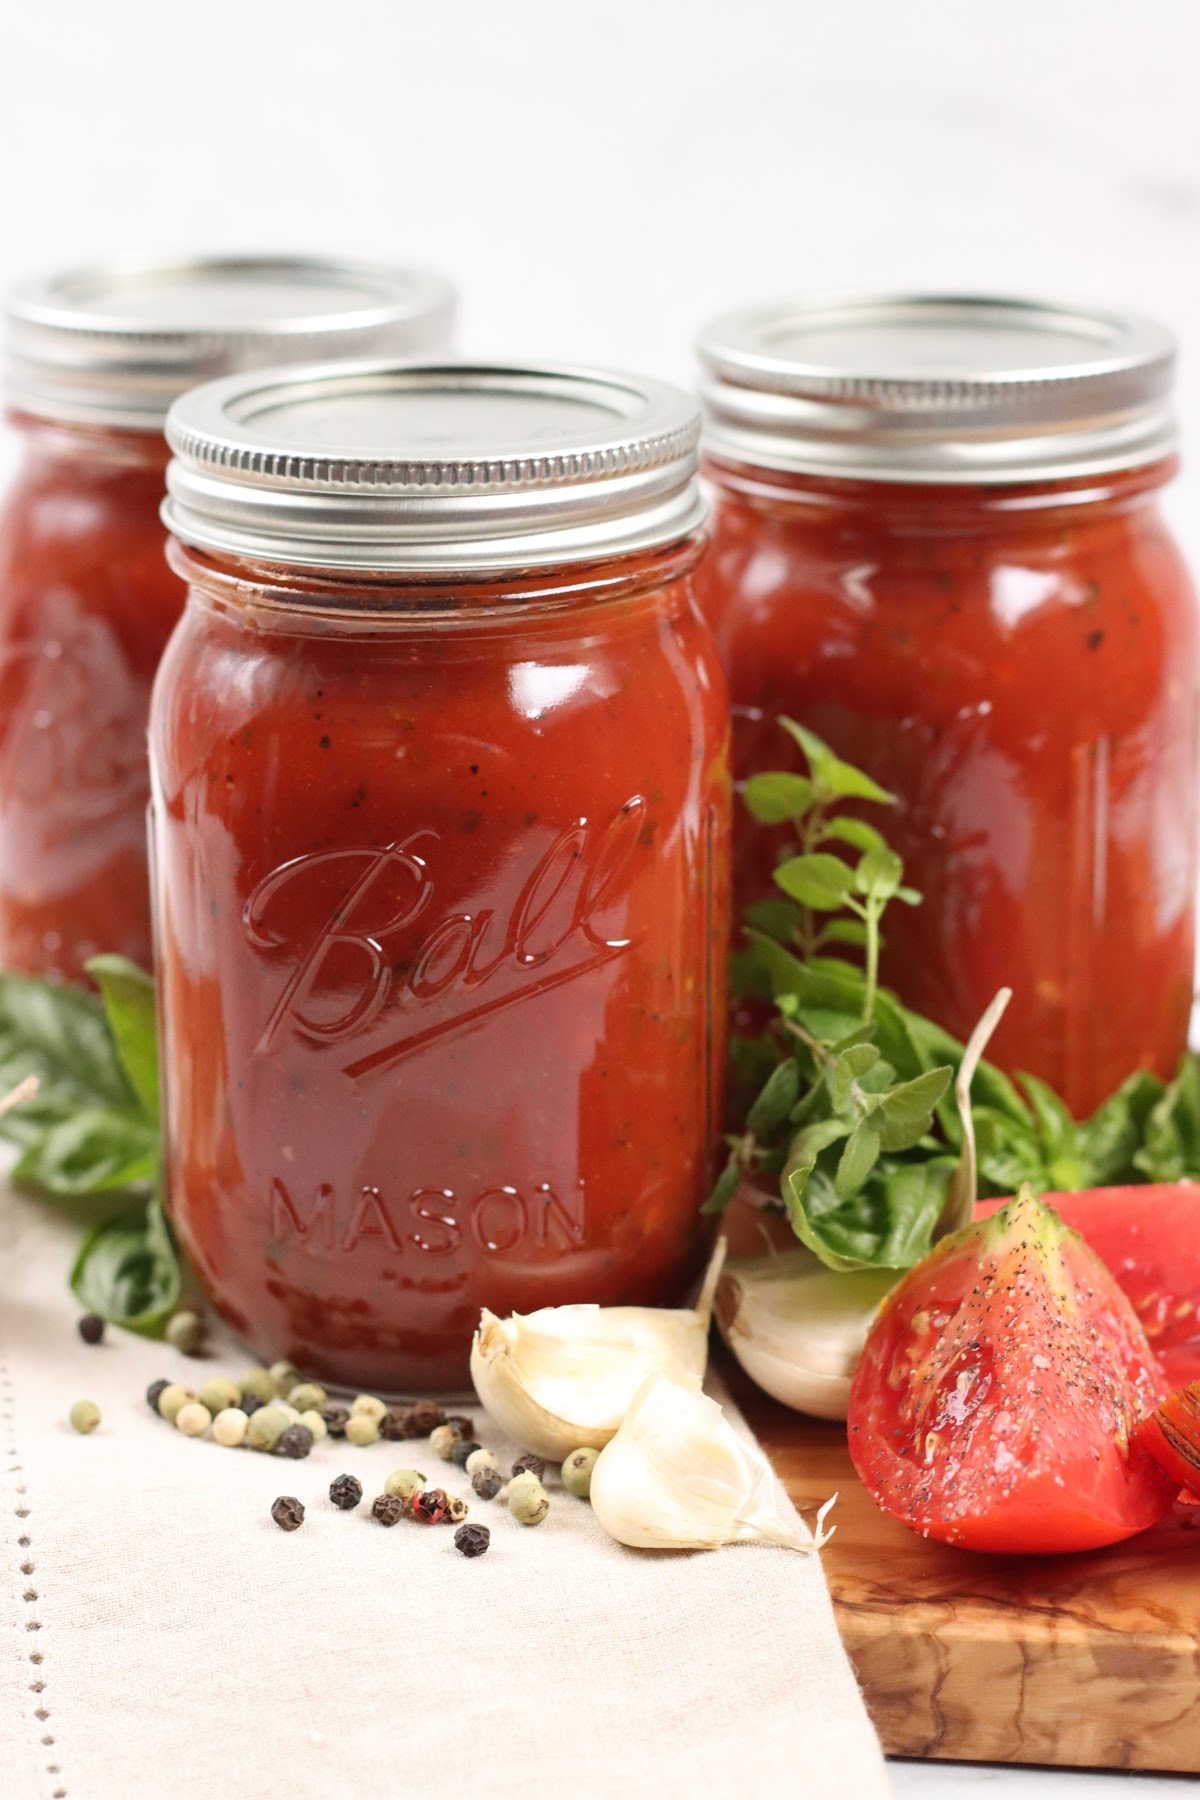 Pint Mason jars of marinara sauce on wooden cutting board, tomato quarters, whole garlic cloves and herbs.